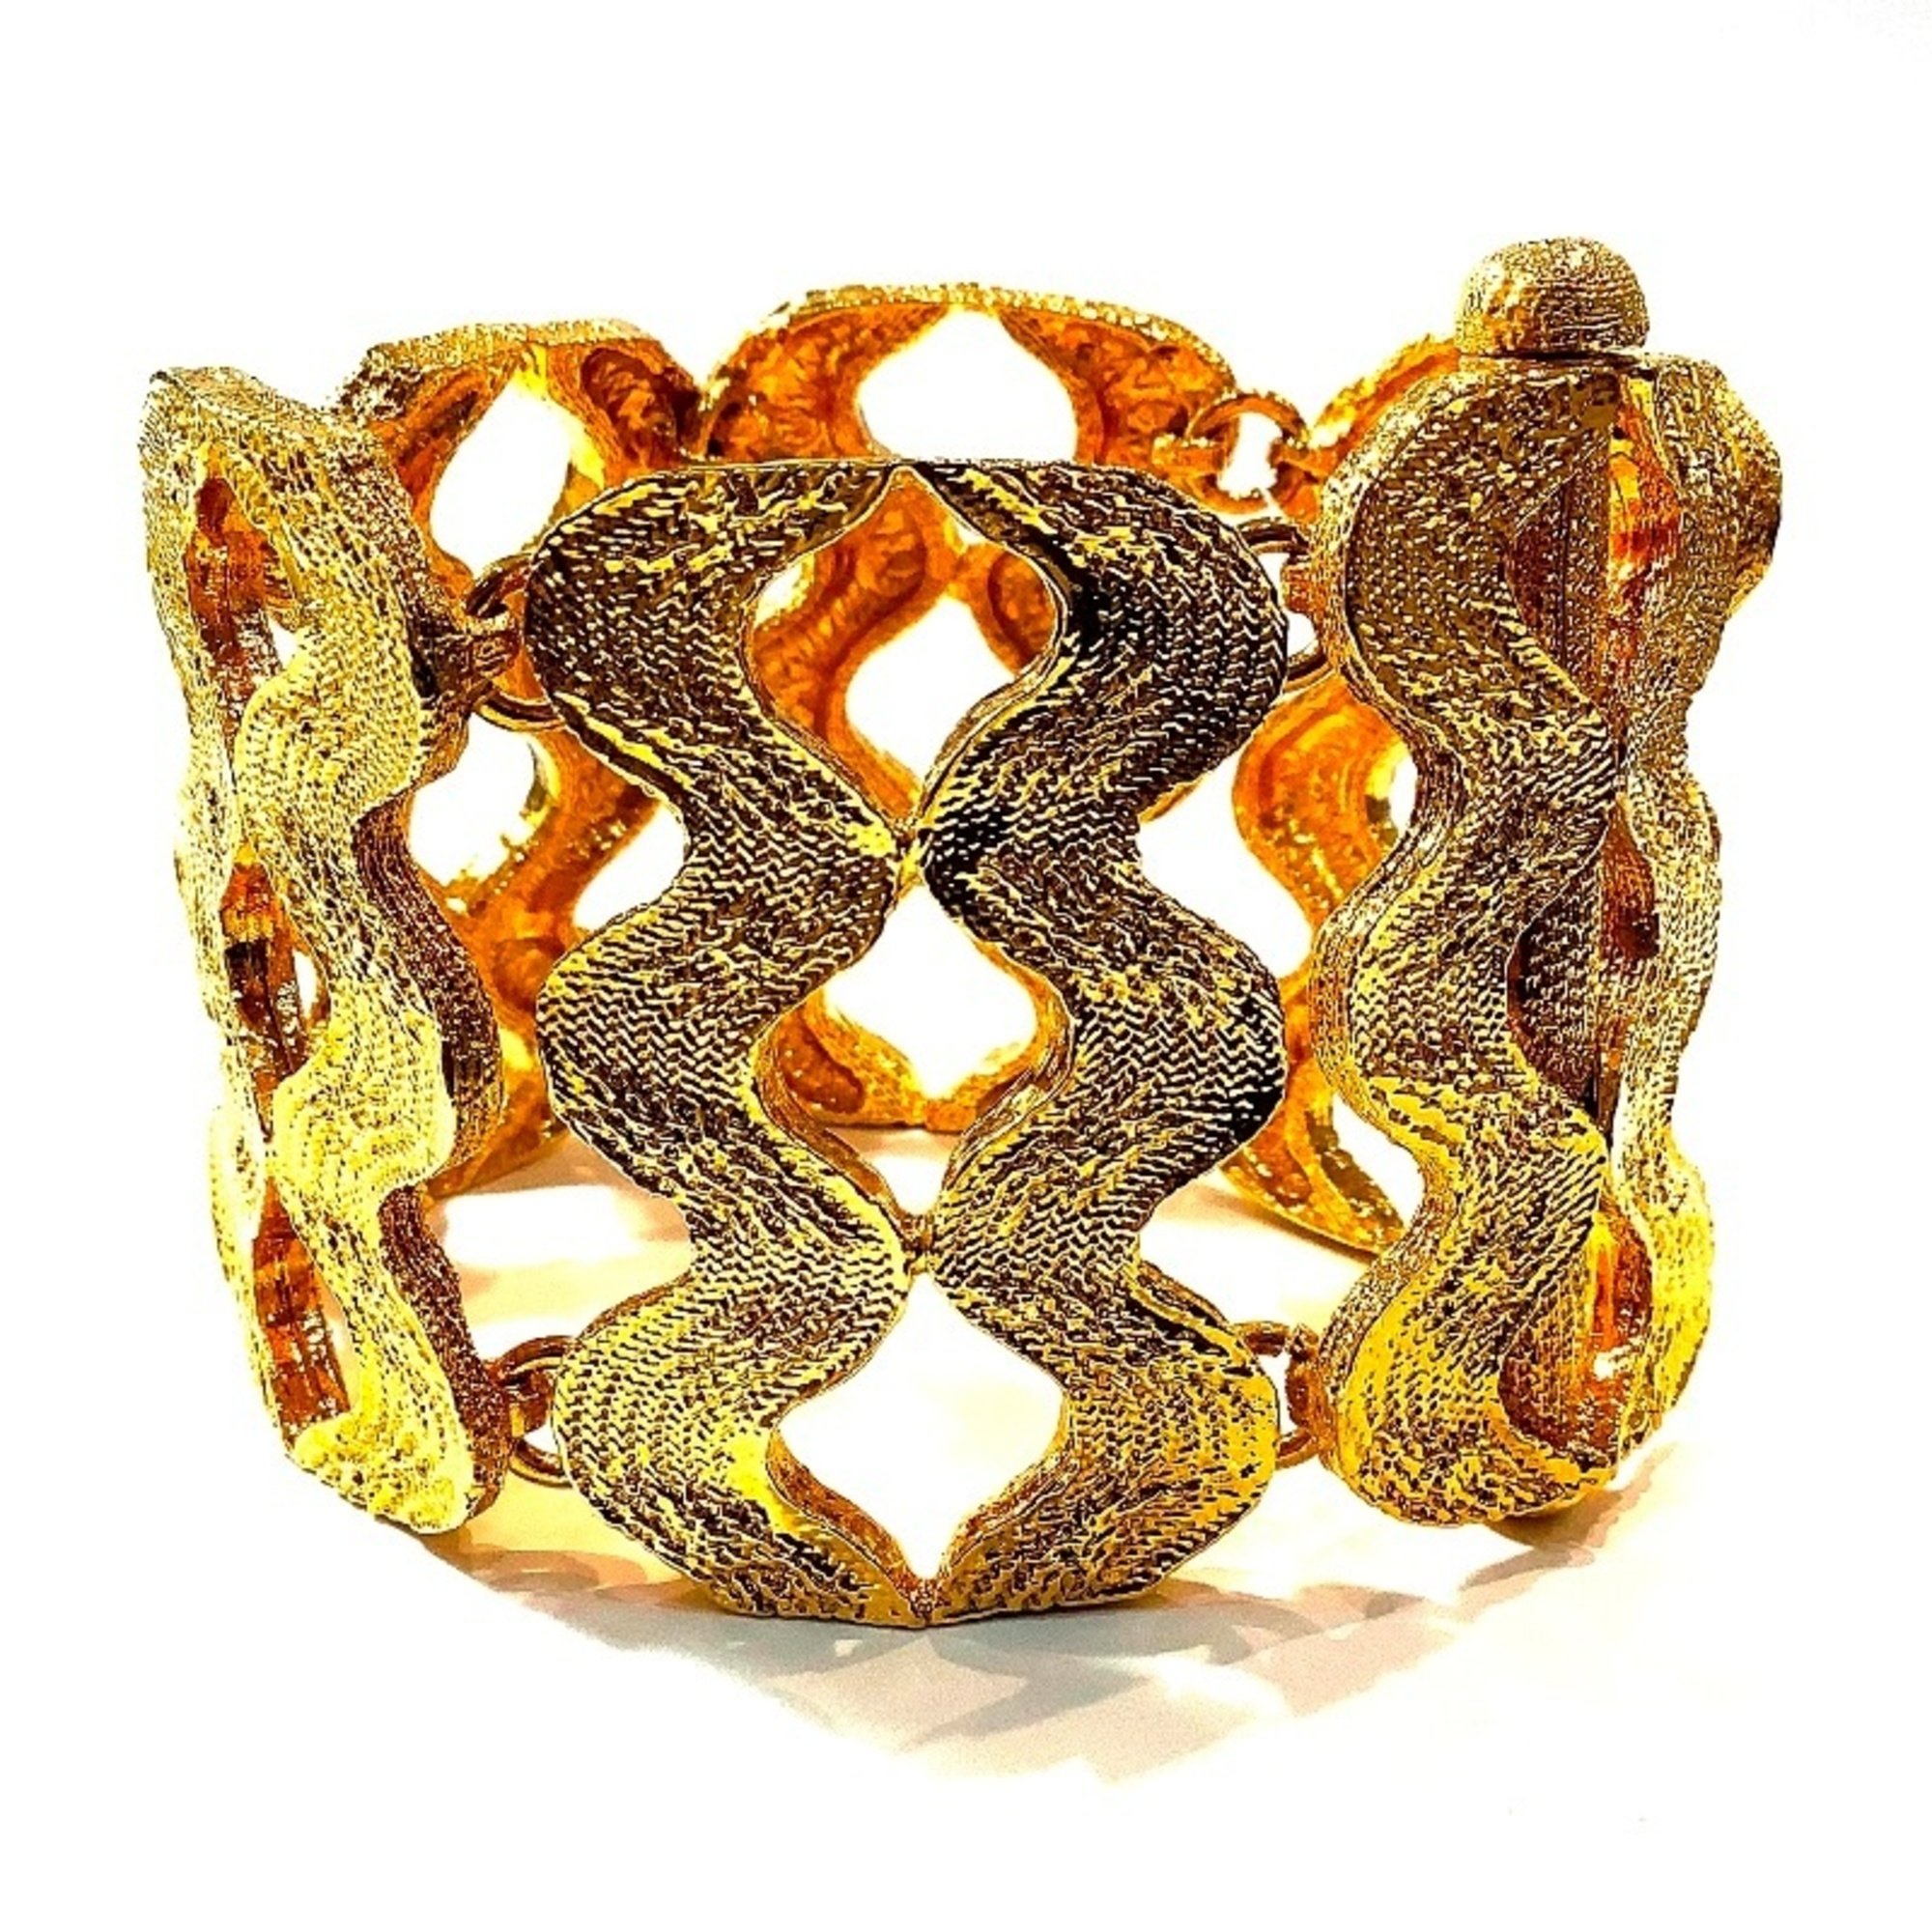 Yves Saint Laurent (YVES SAINT LAURENT) YSL Wave pattern bangle bracelet Width approx. 5cm Gold color Plug-in type KB-8425